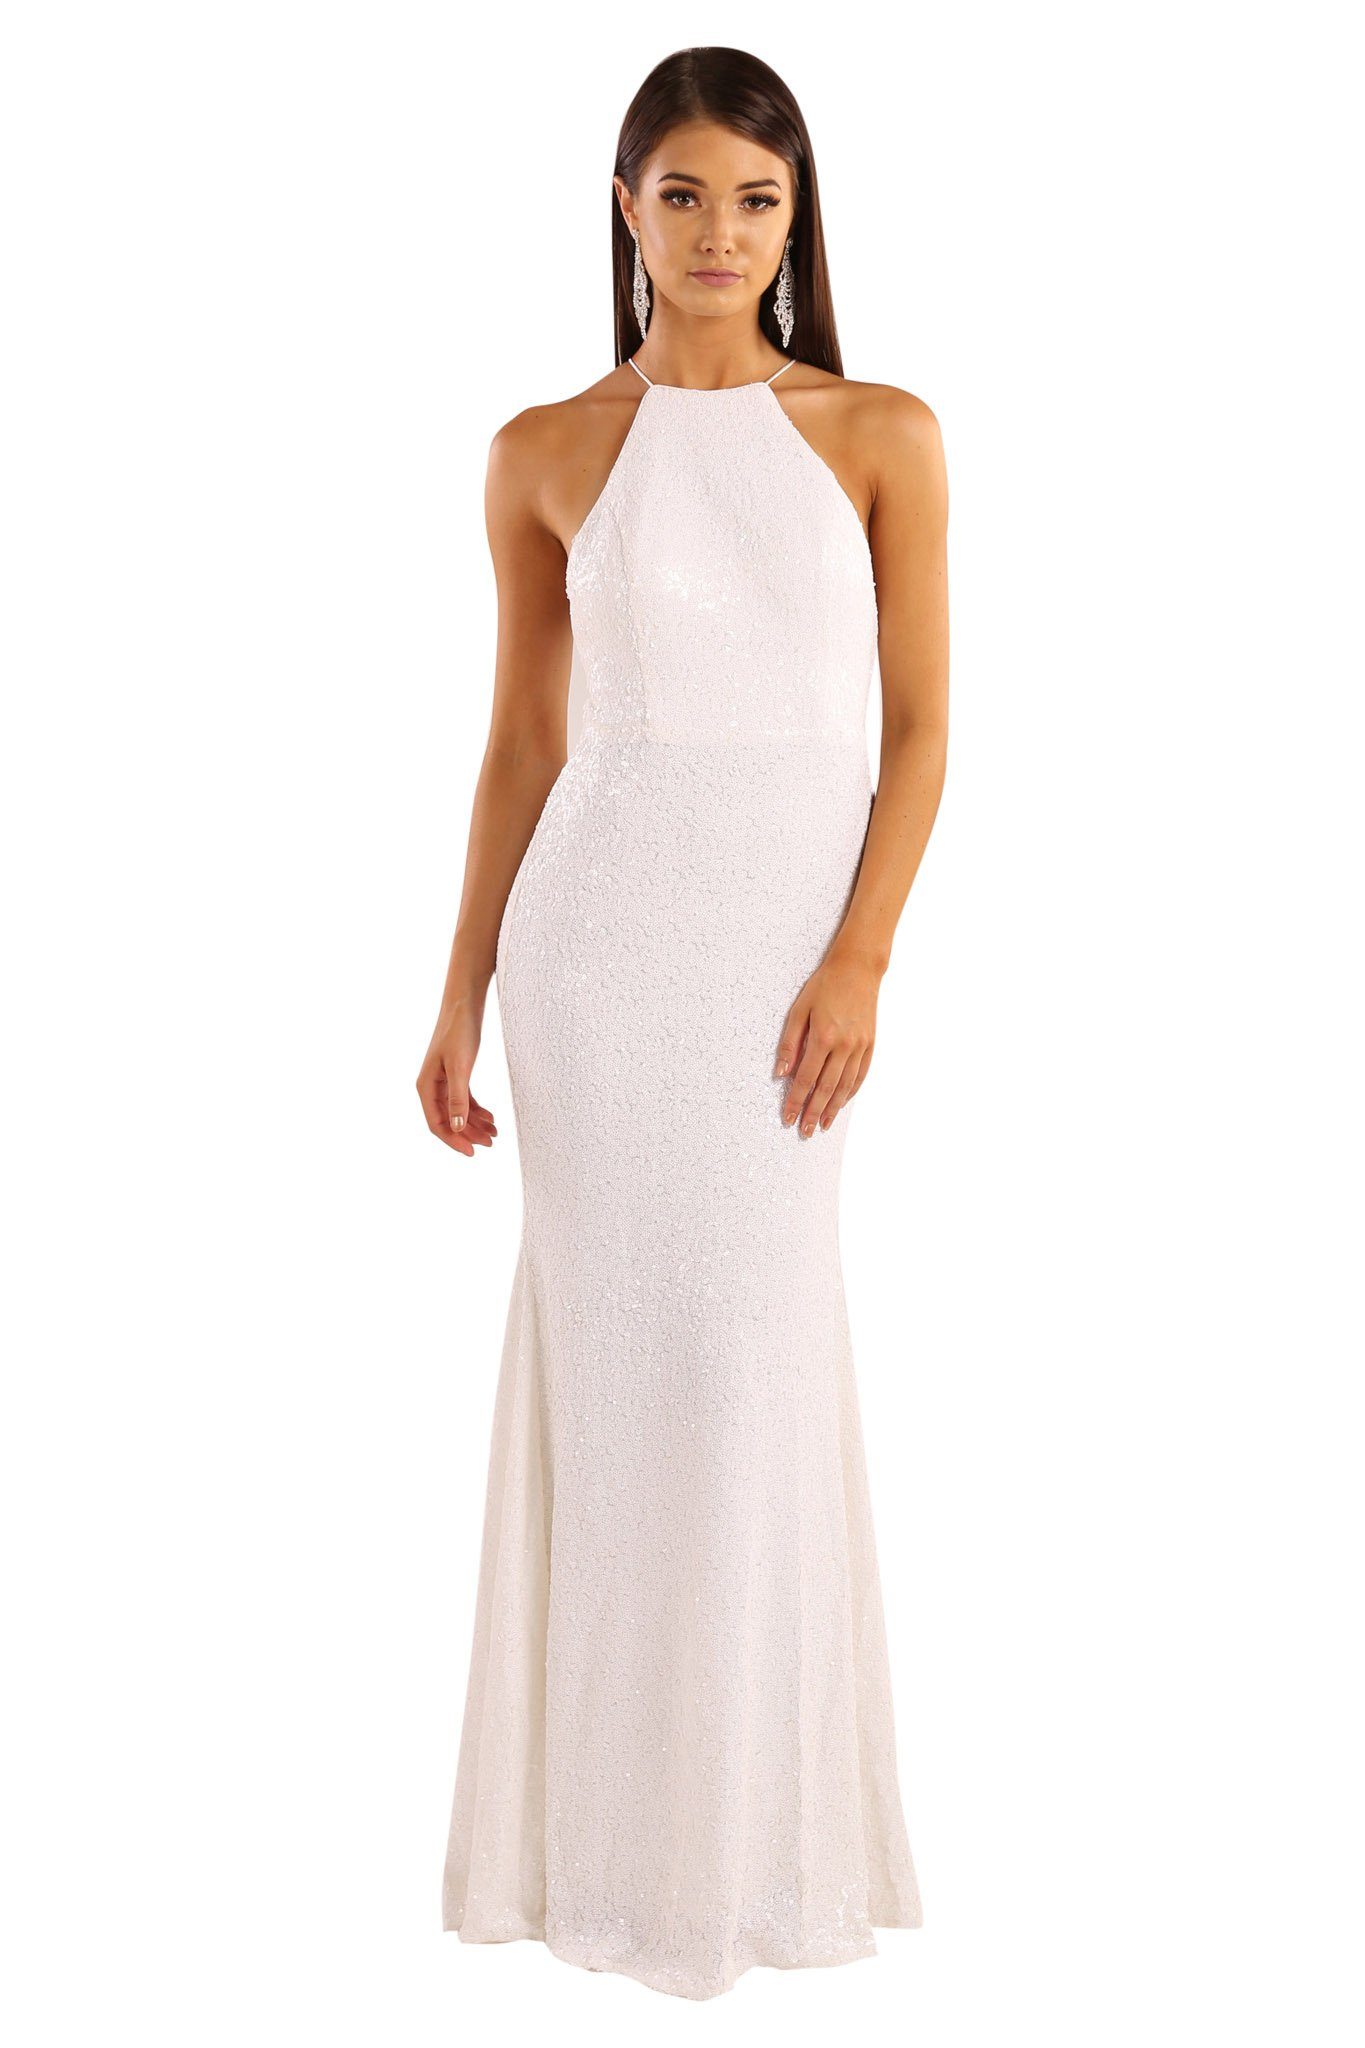 white tight dress